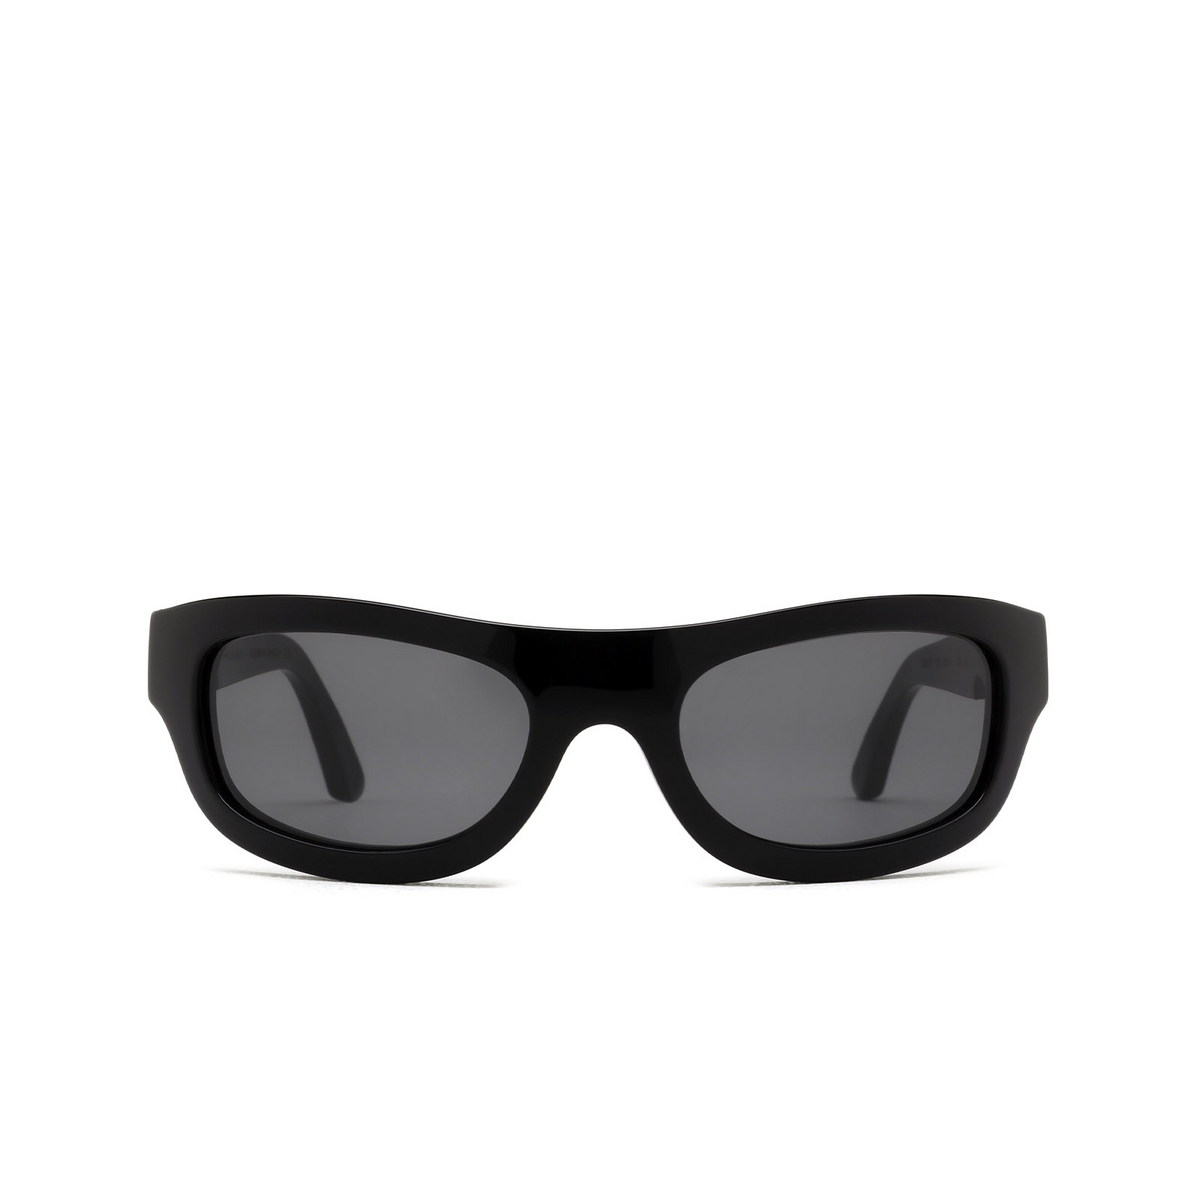 Huma ALI Sunglasses 06 Black - front view